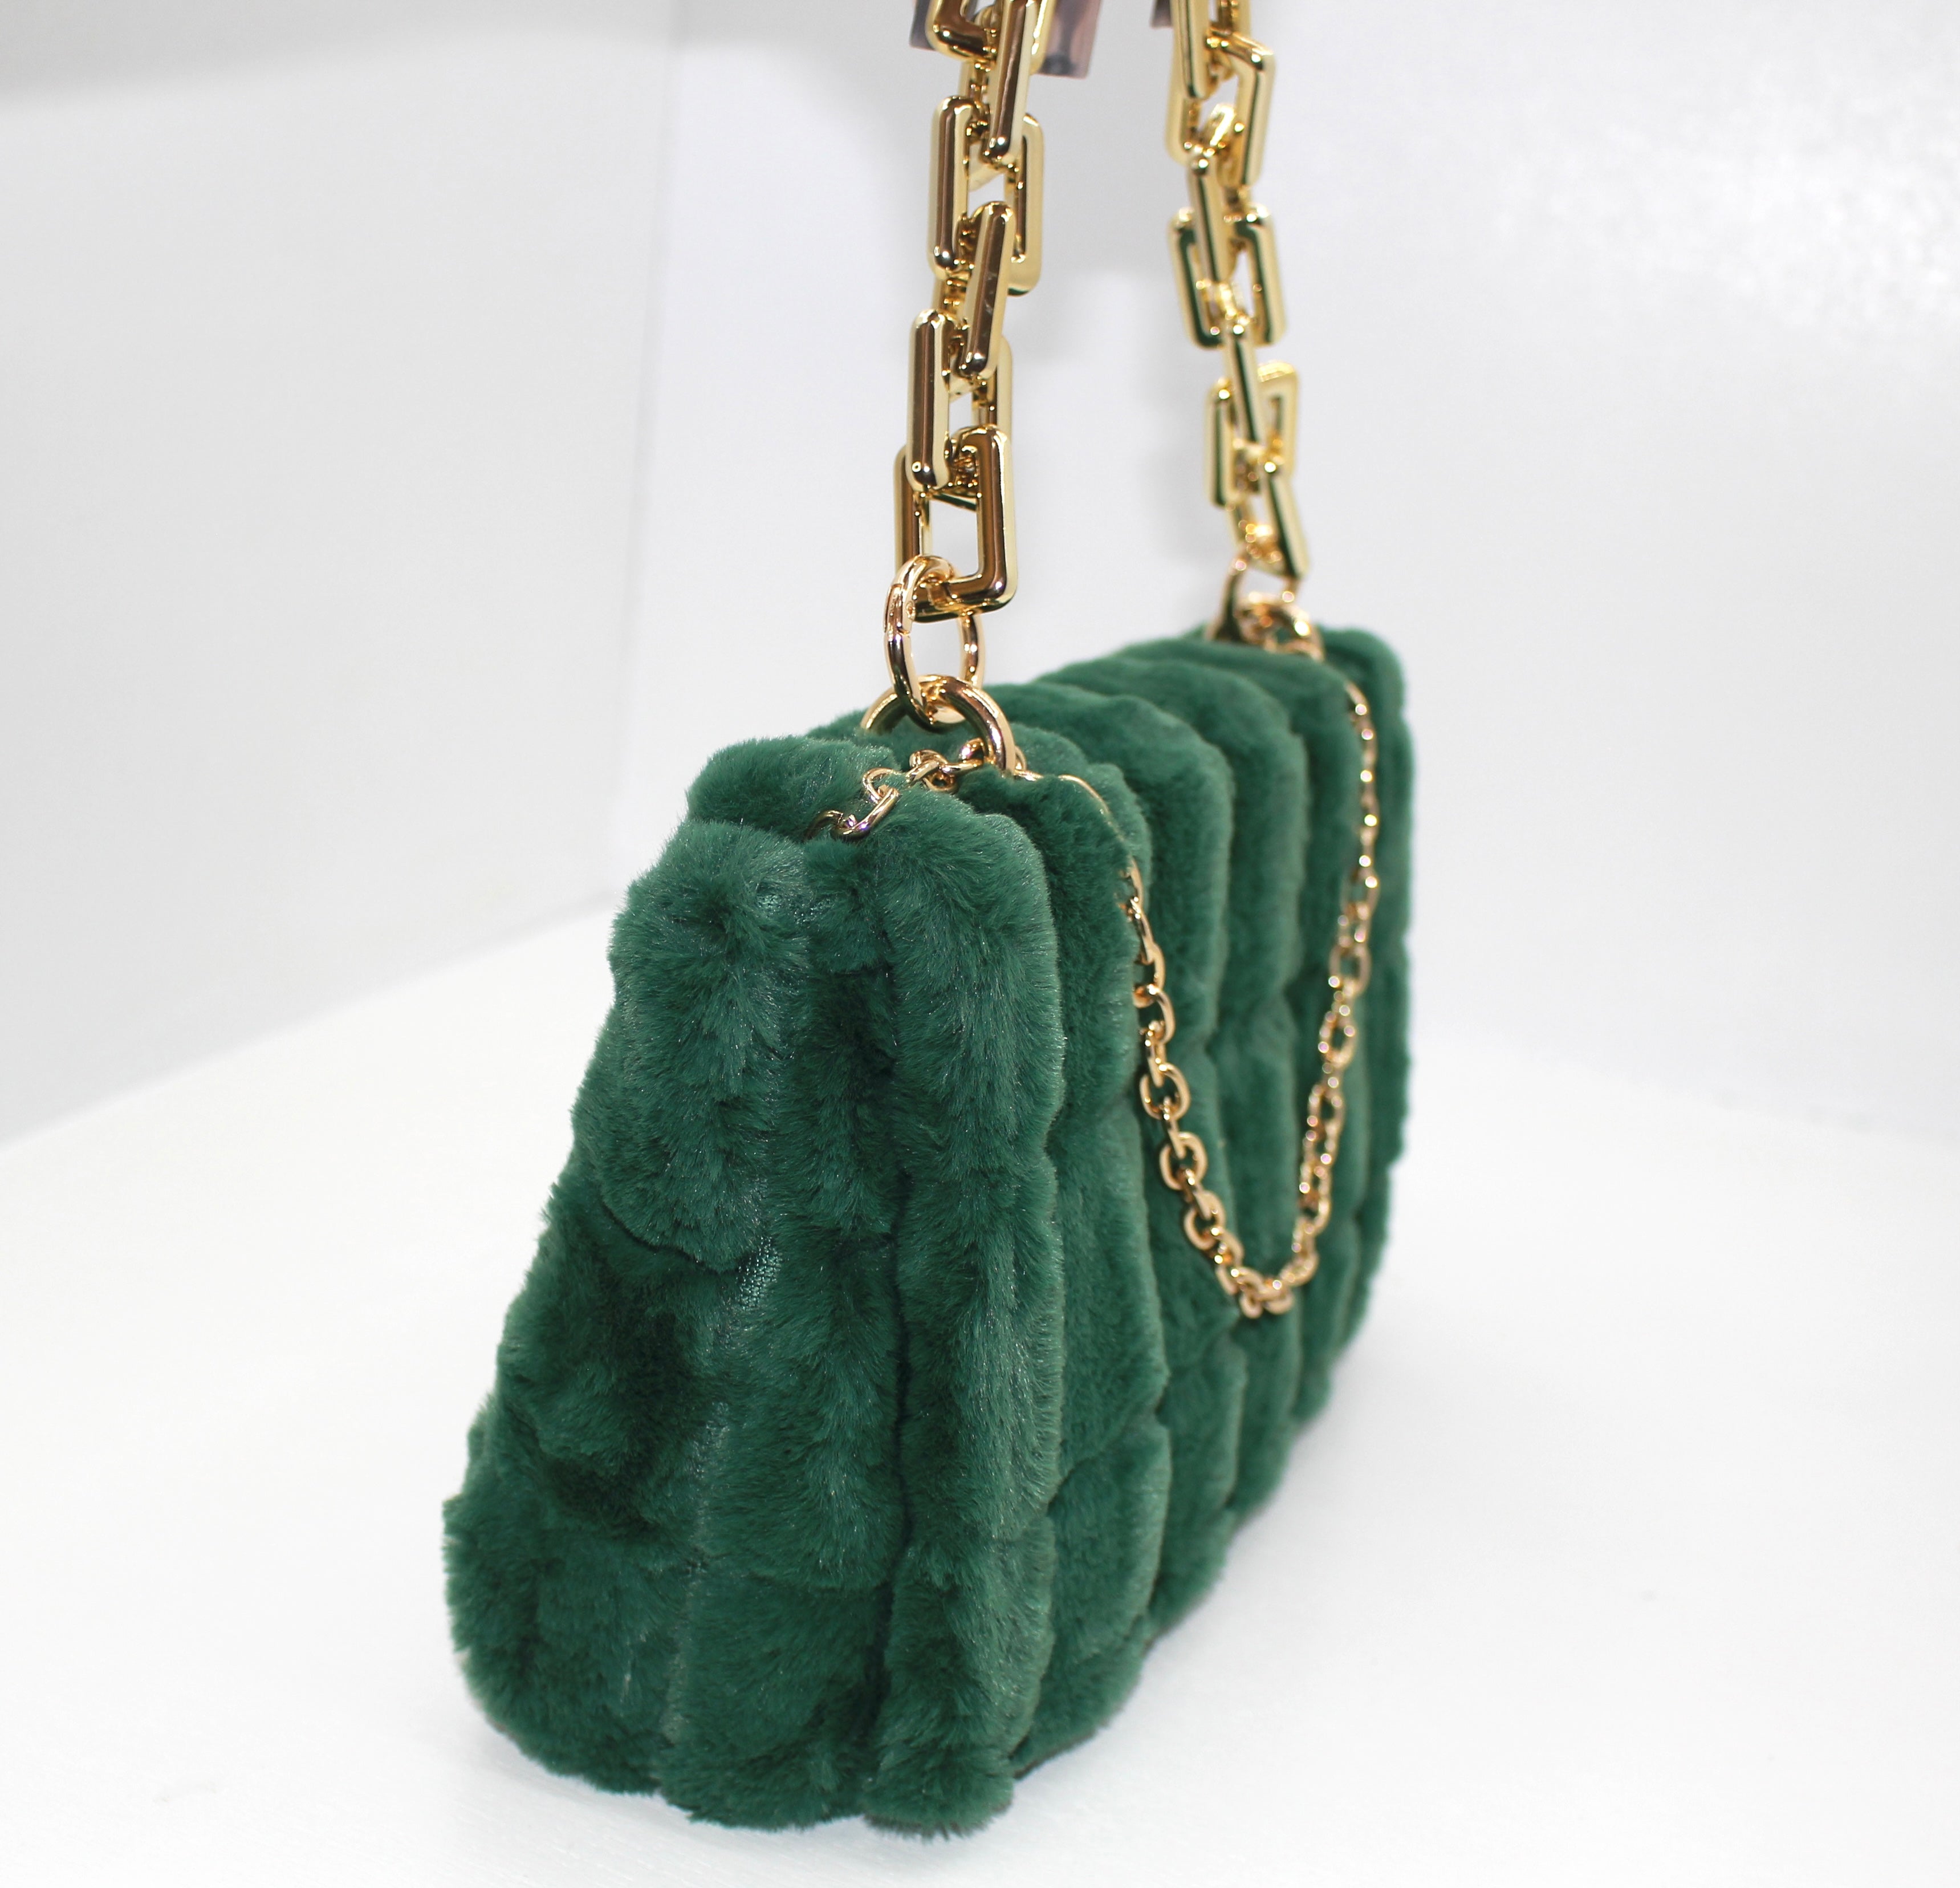 Green Money Bag